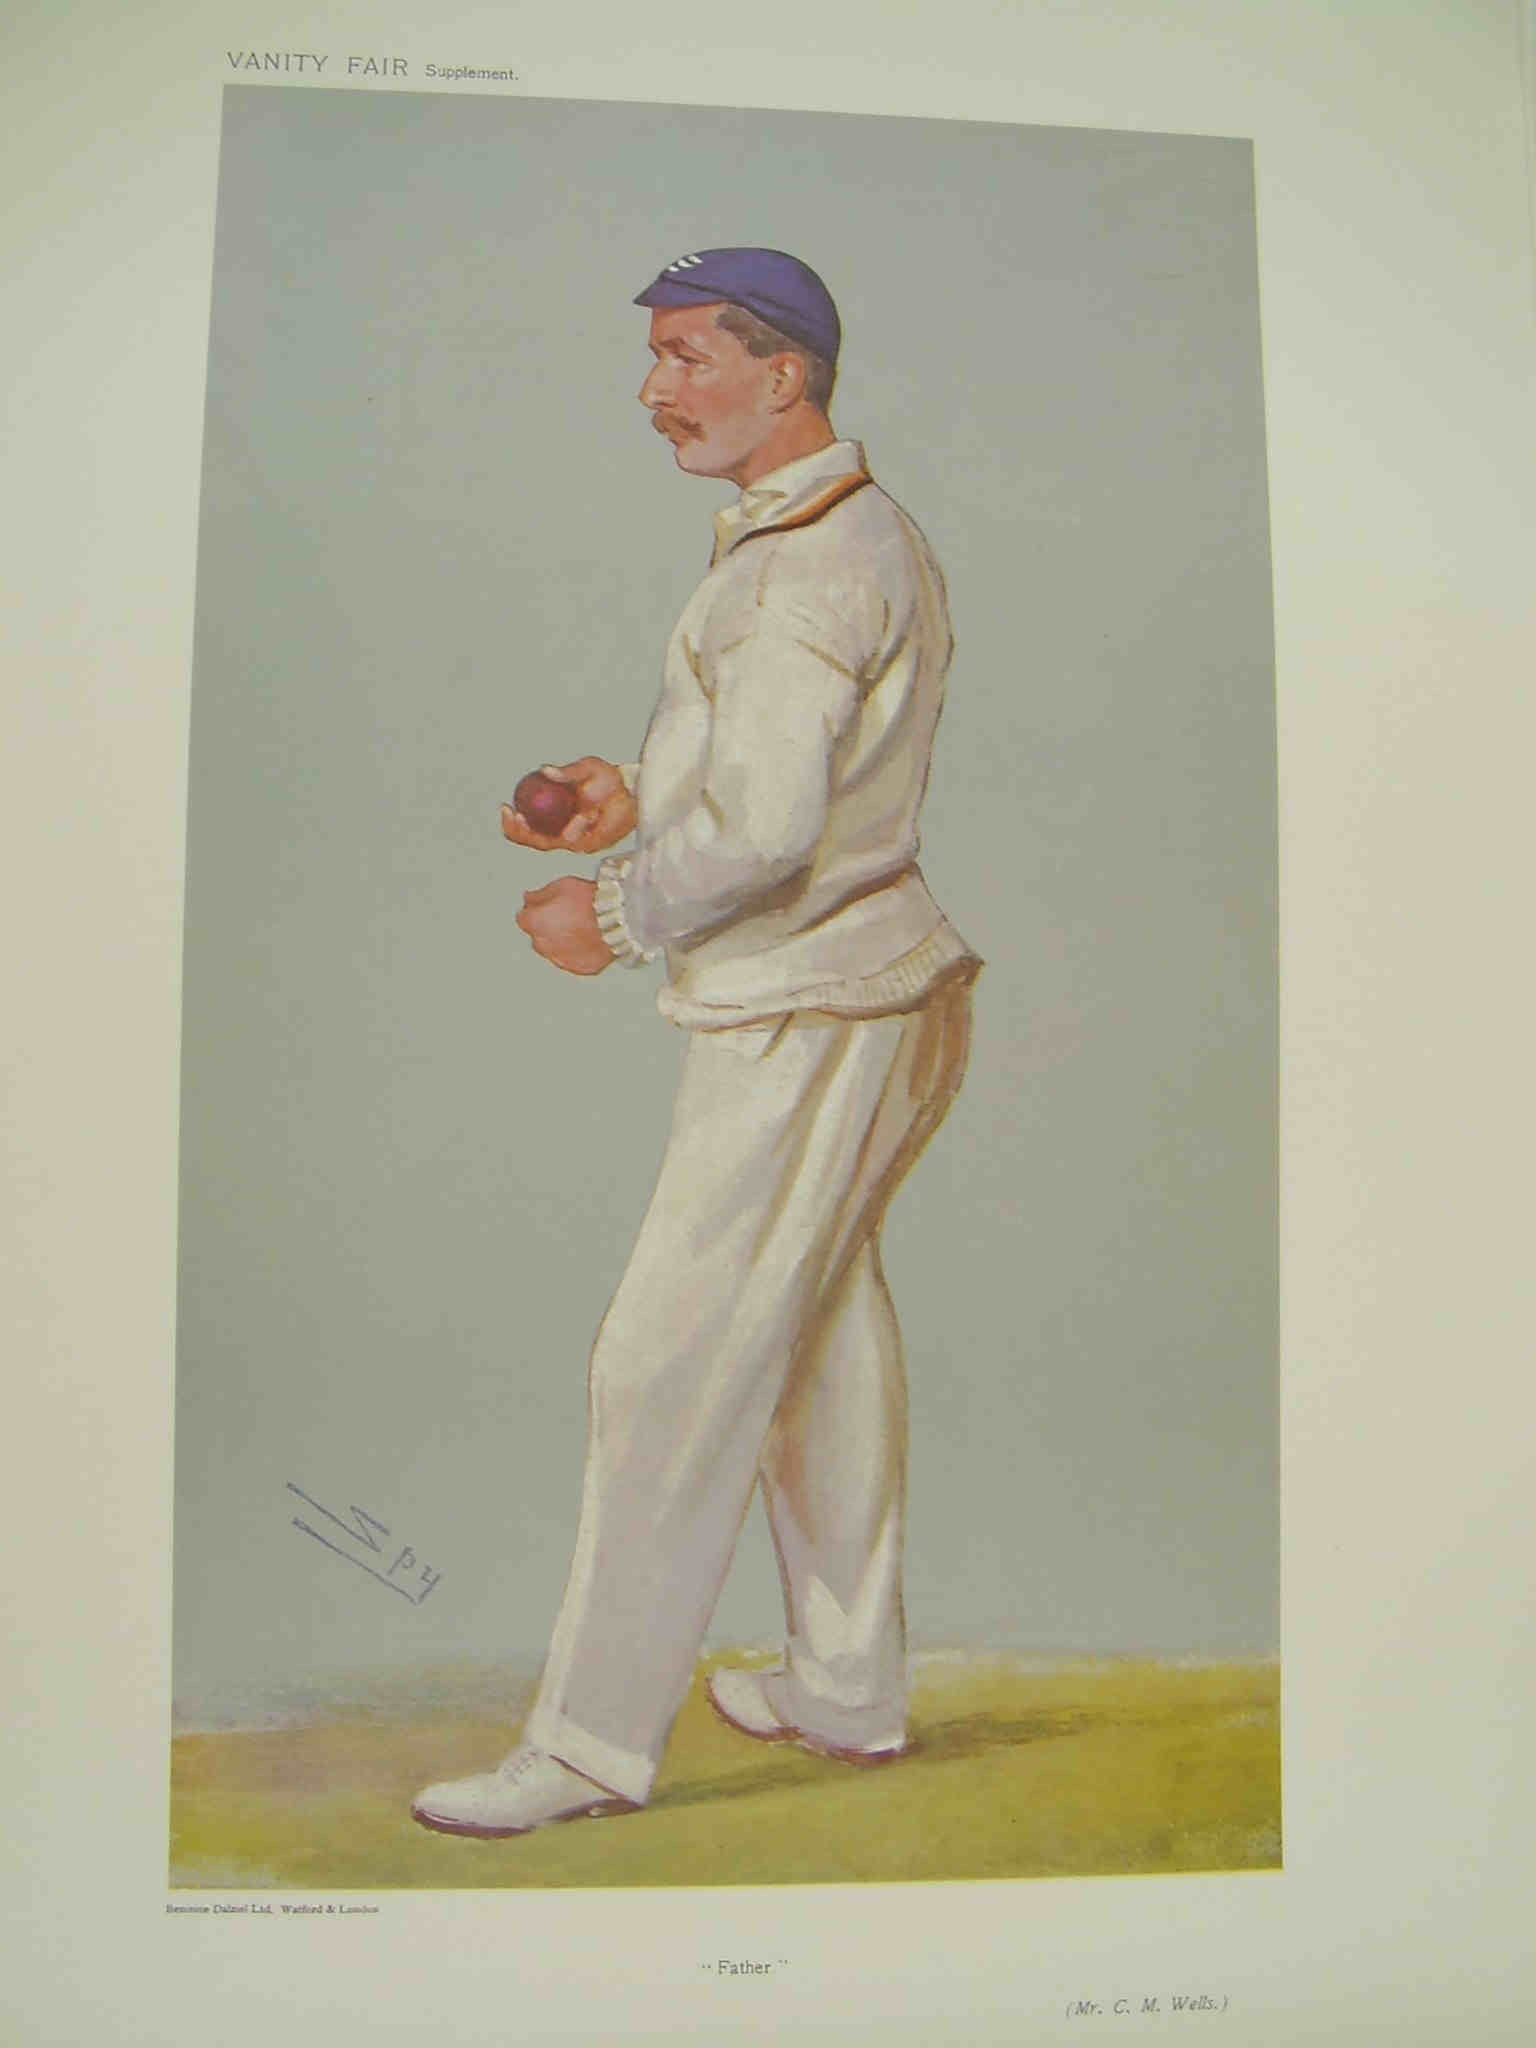 Vanity Fair Cricket Print. C.M.Wells 